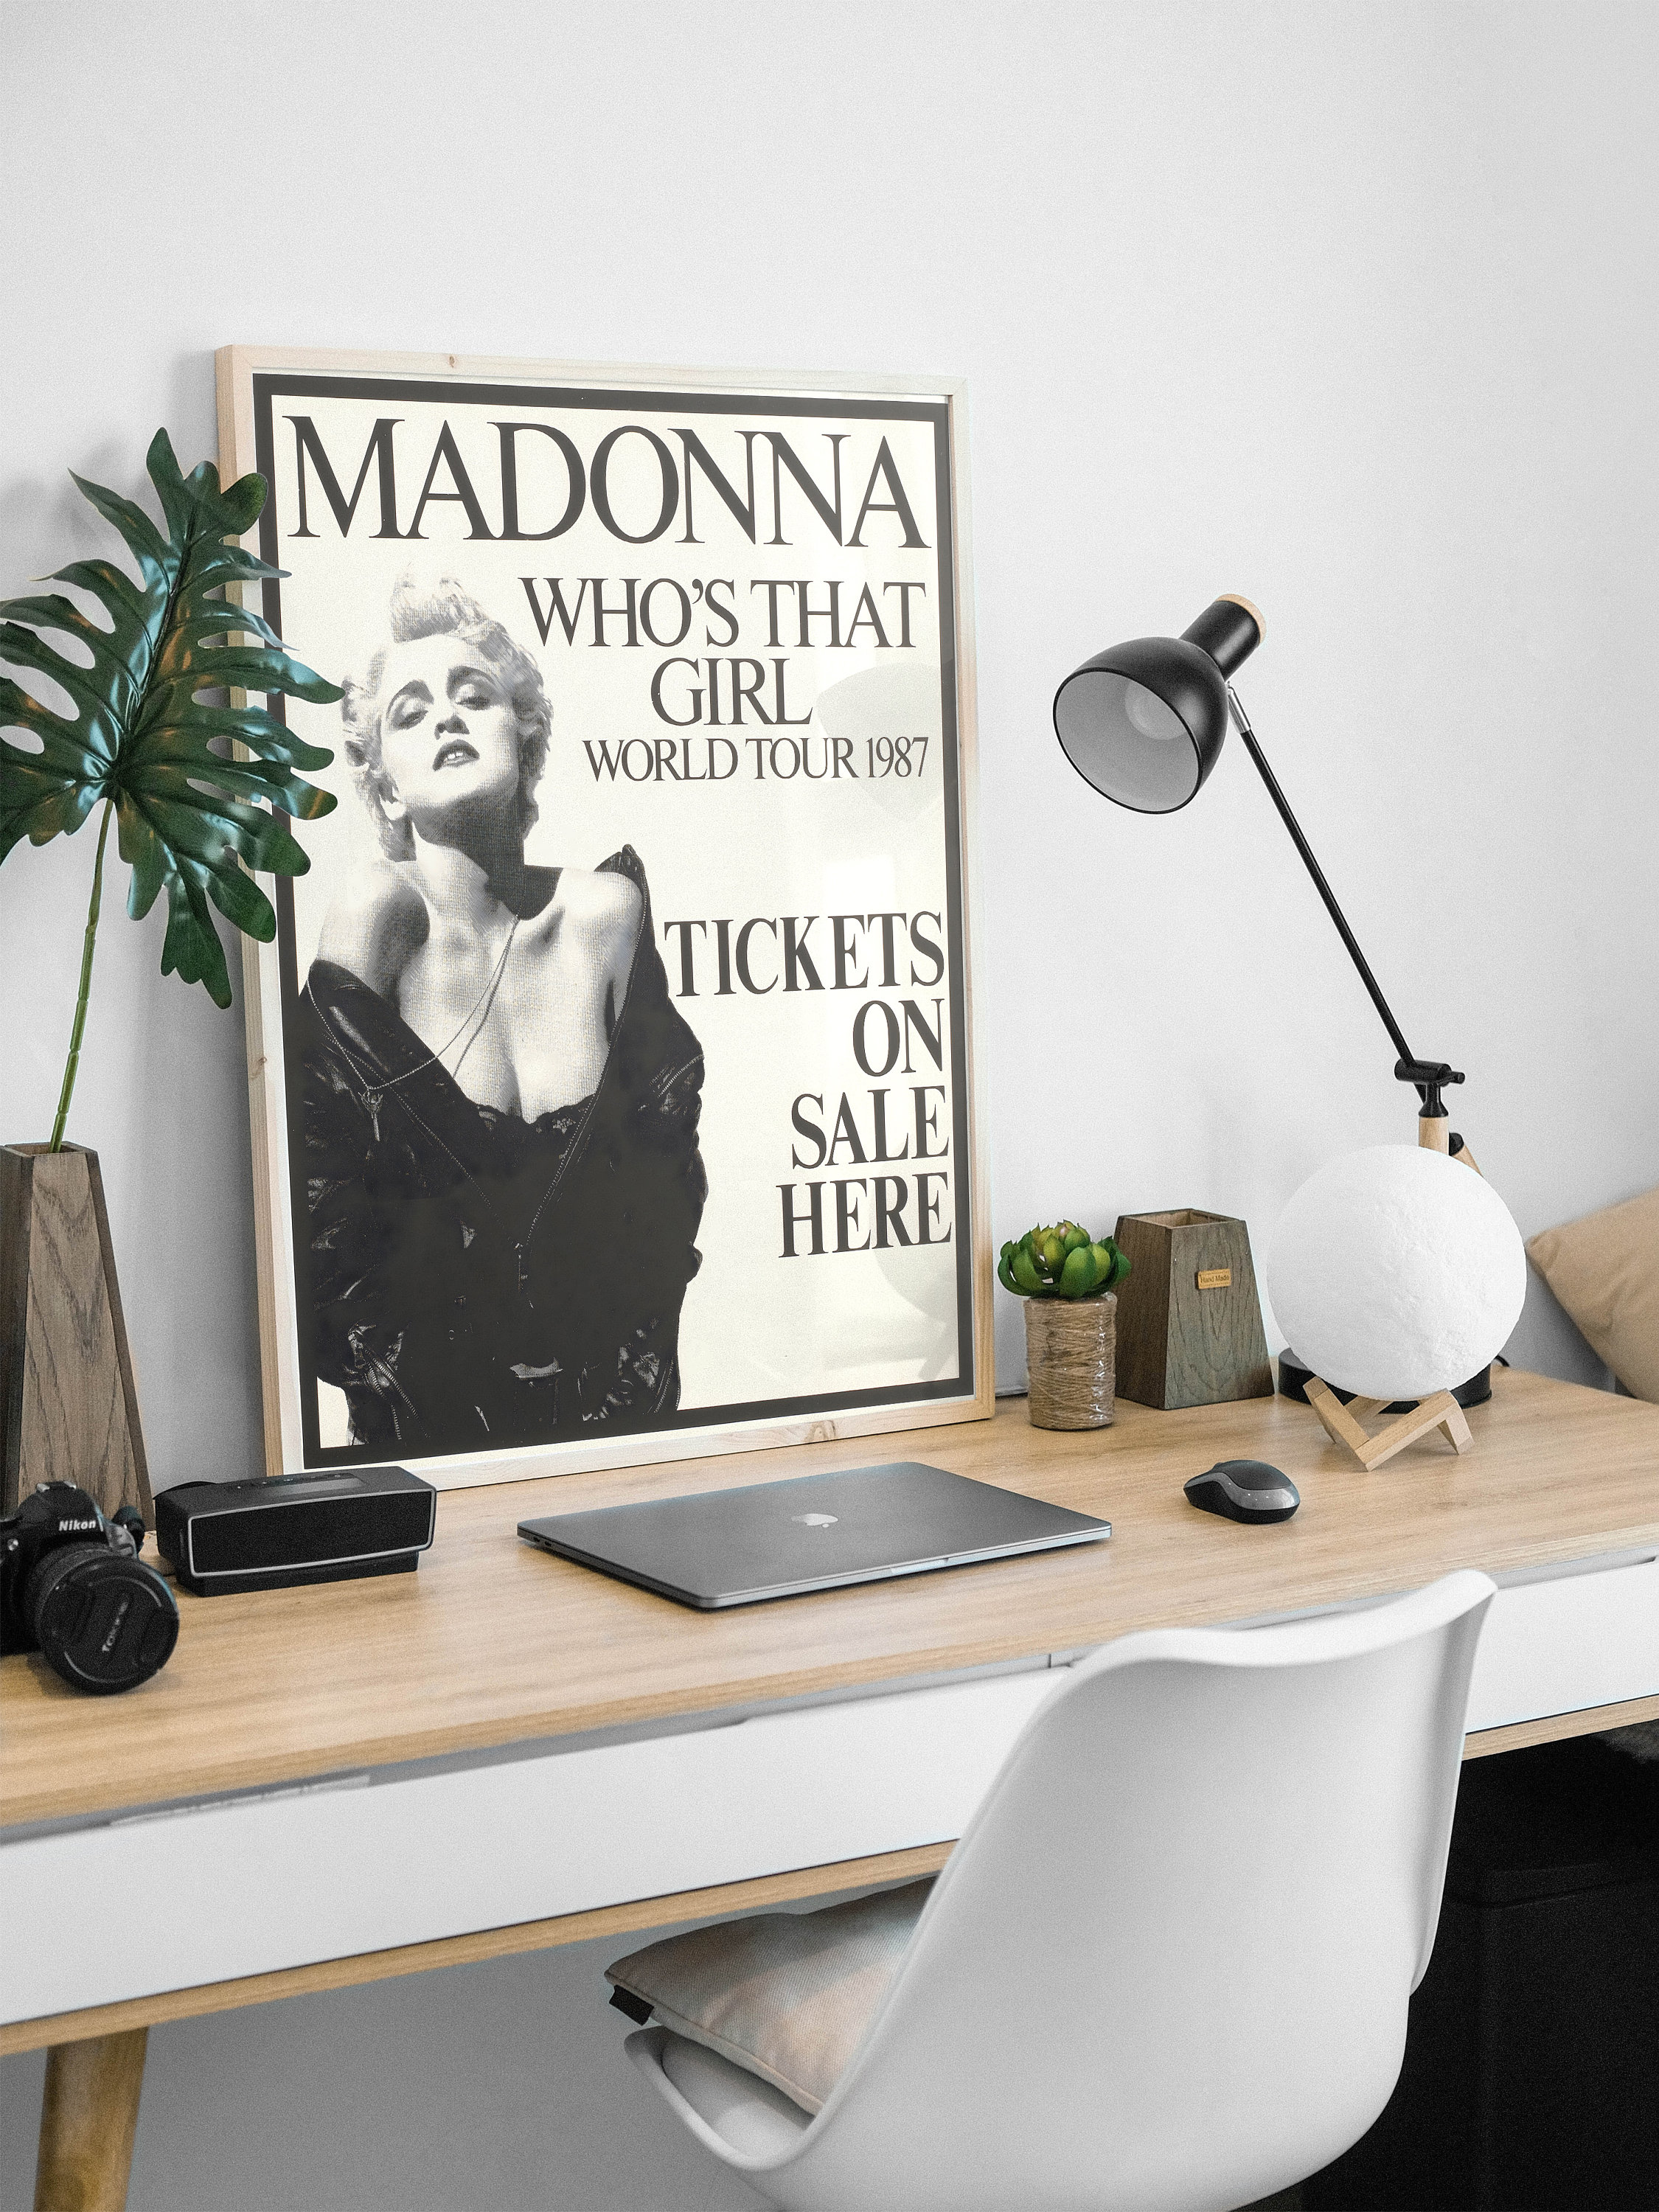 Madonna Poster Print | Madonna Concert | Retro Music Poster